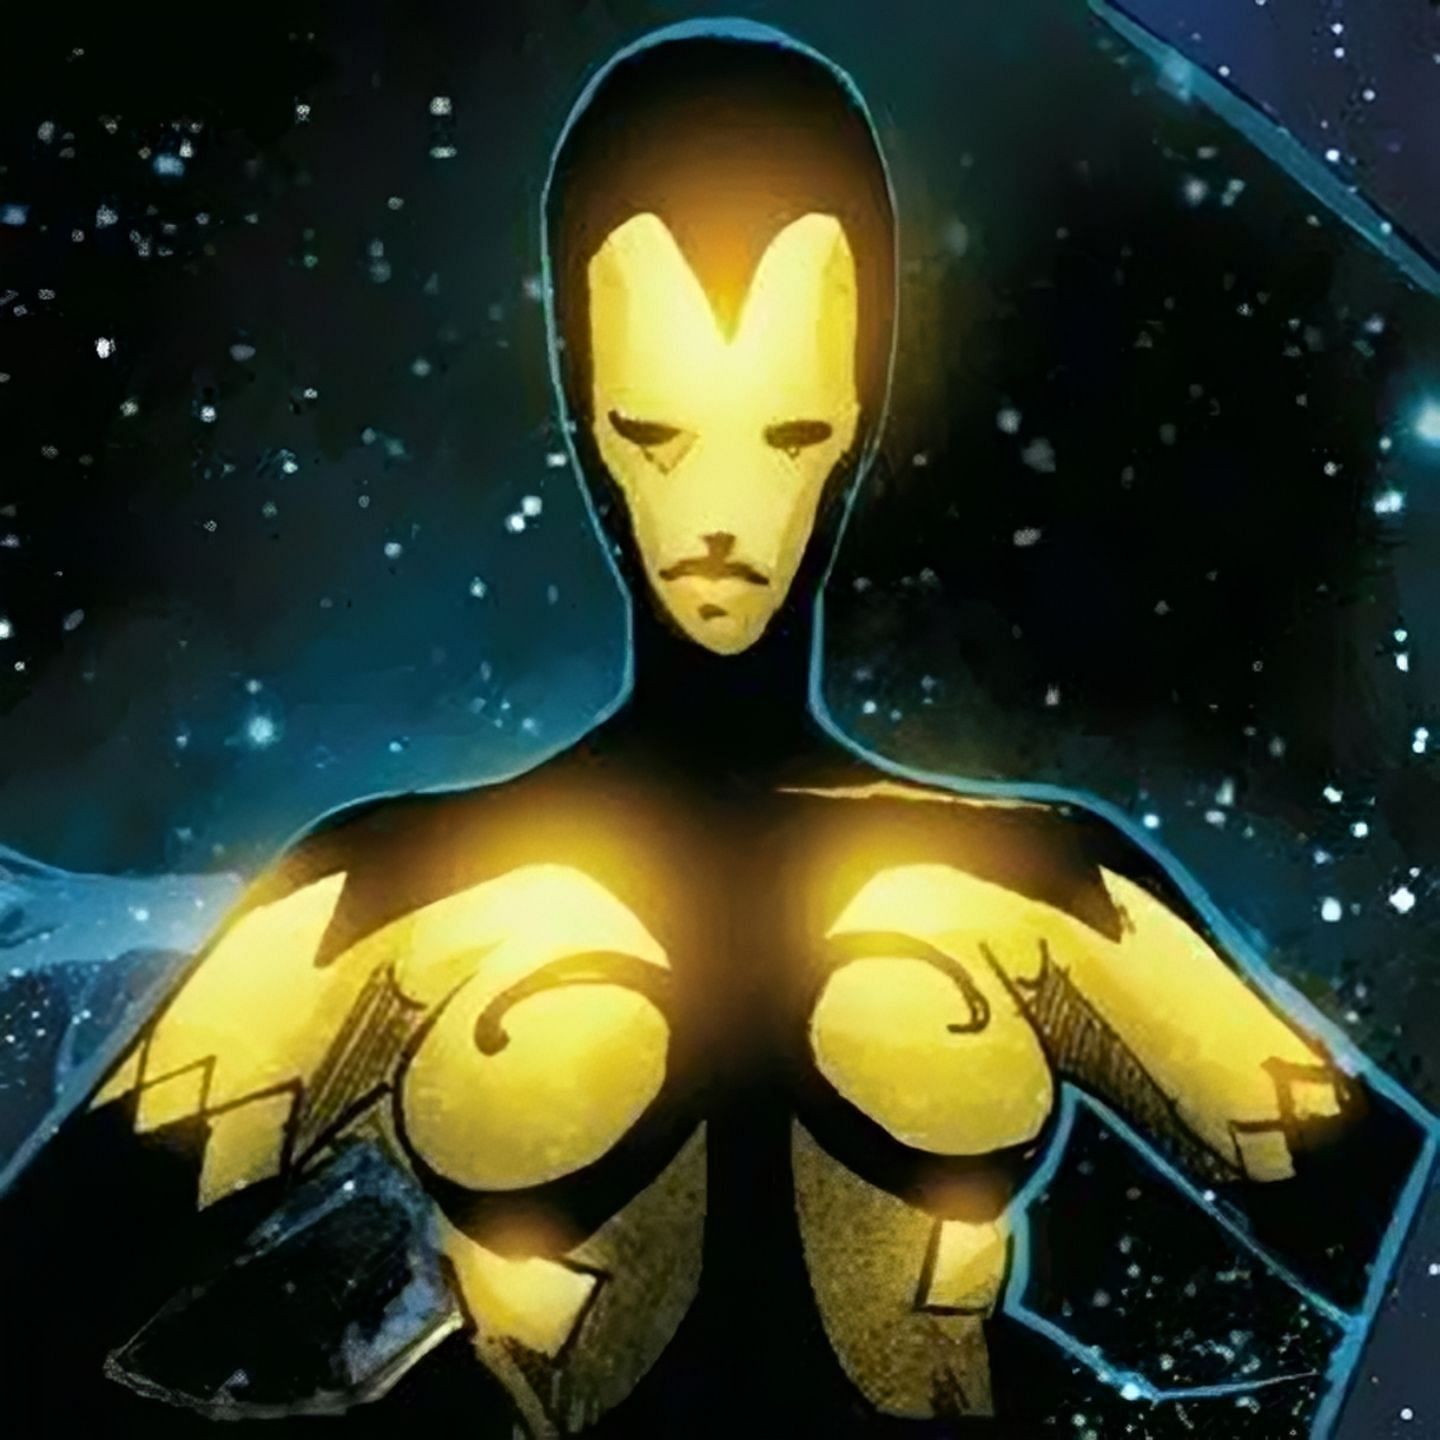 Infinity (Image via Marvel Comics)